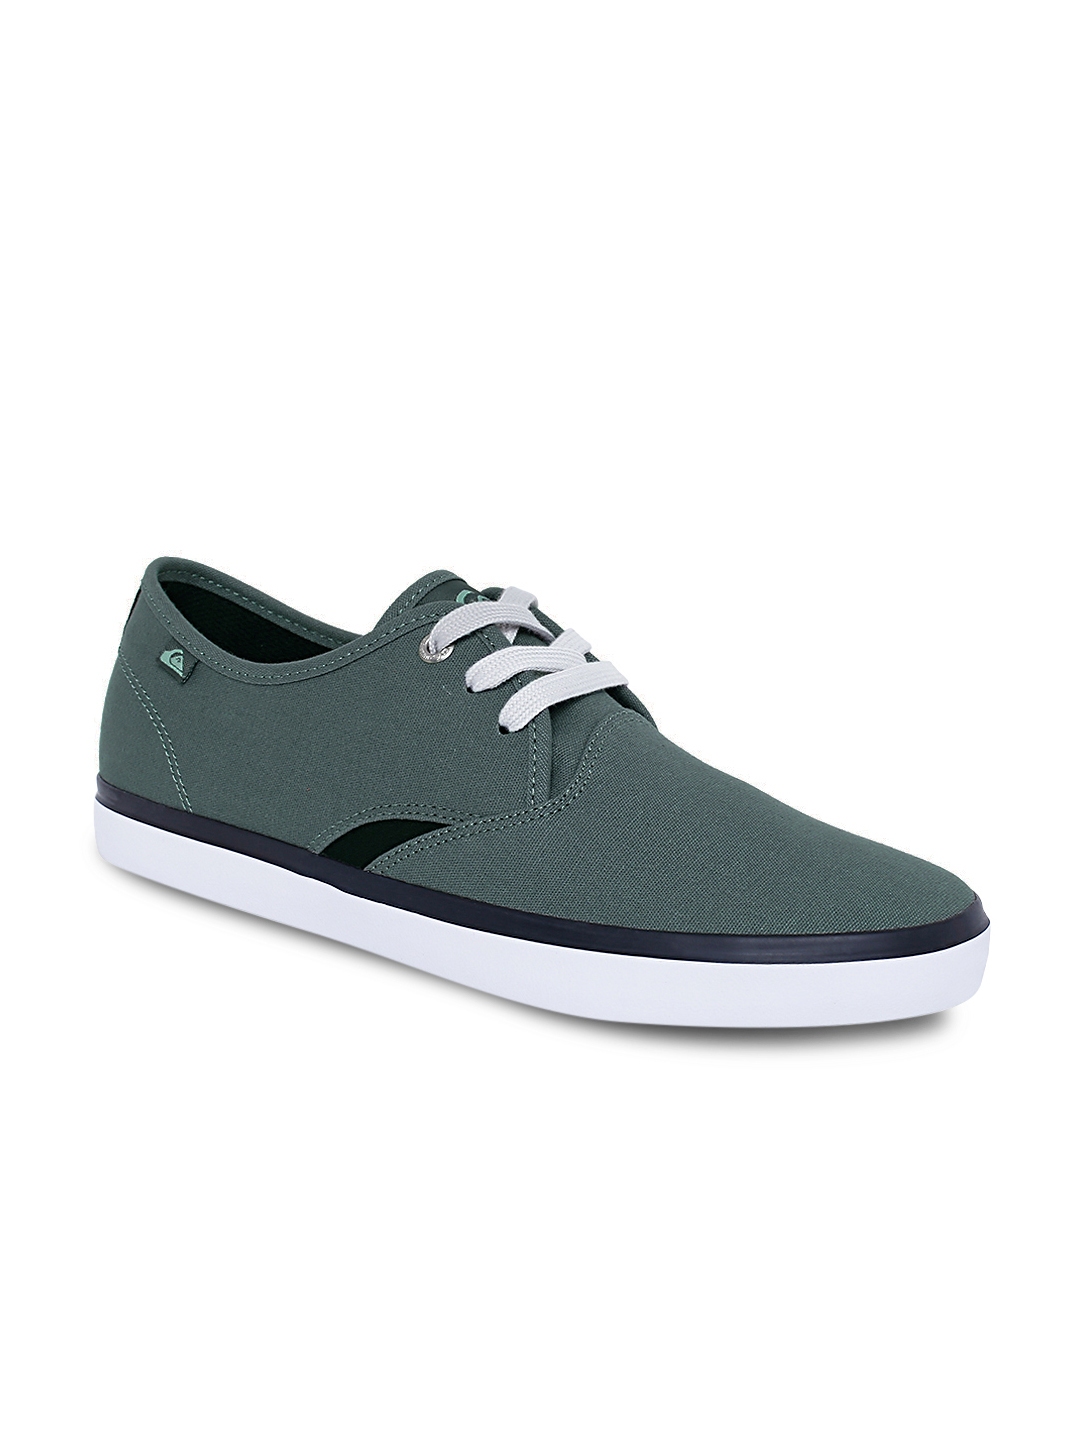 Buy Quiksilver Men Olive Green Sneakers - Casual Shoes for Men 2011167 ...